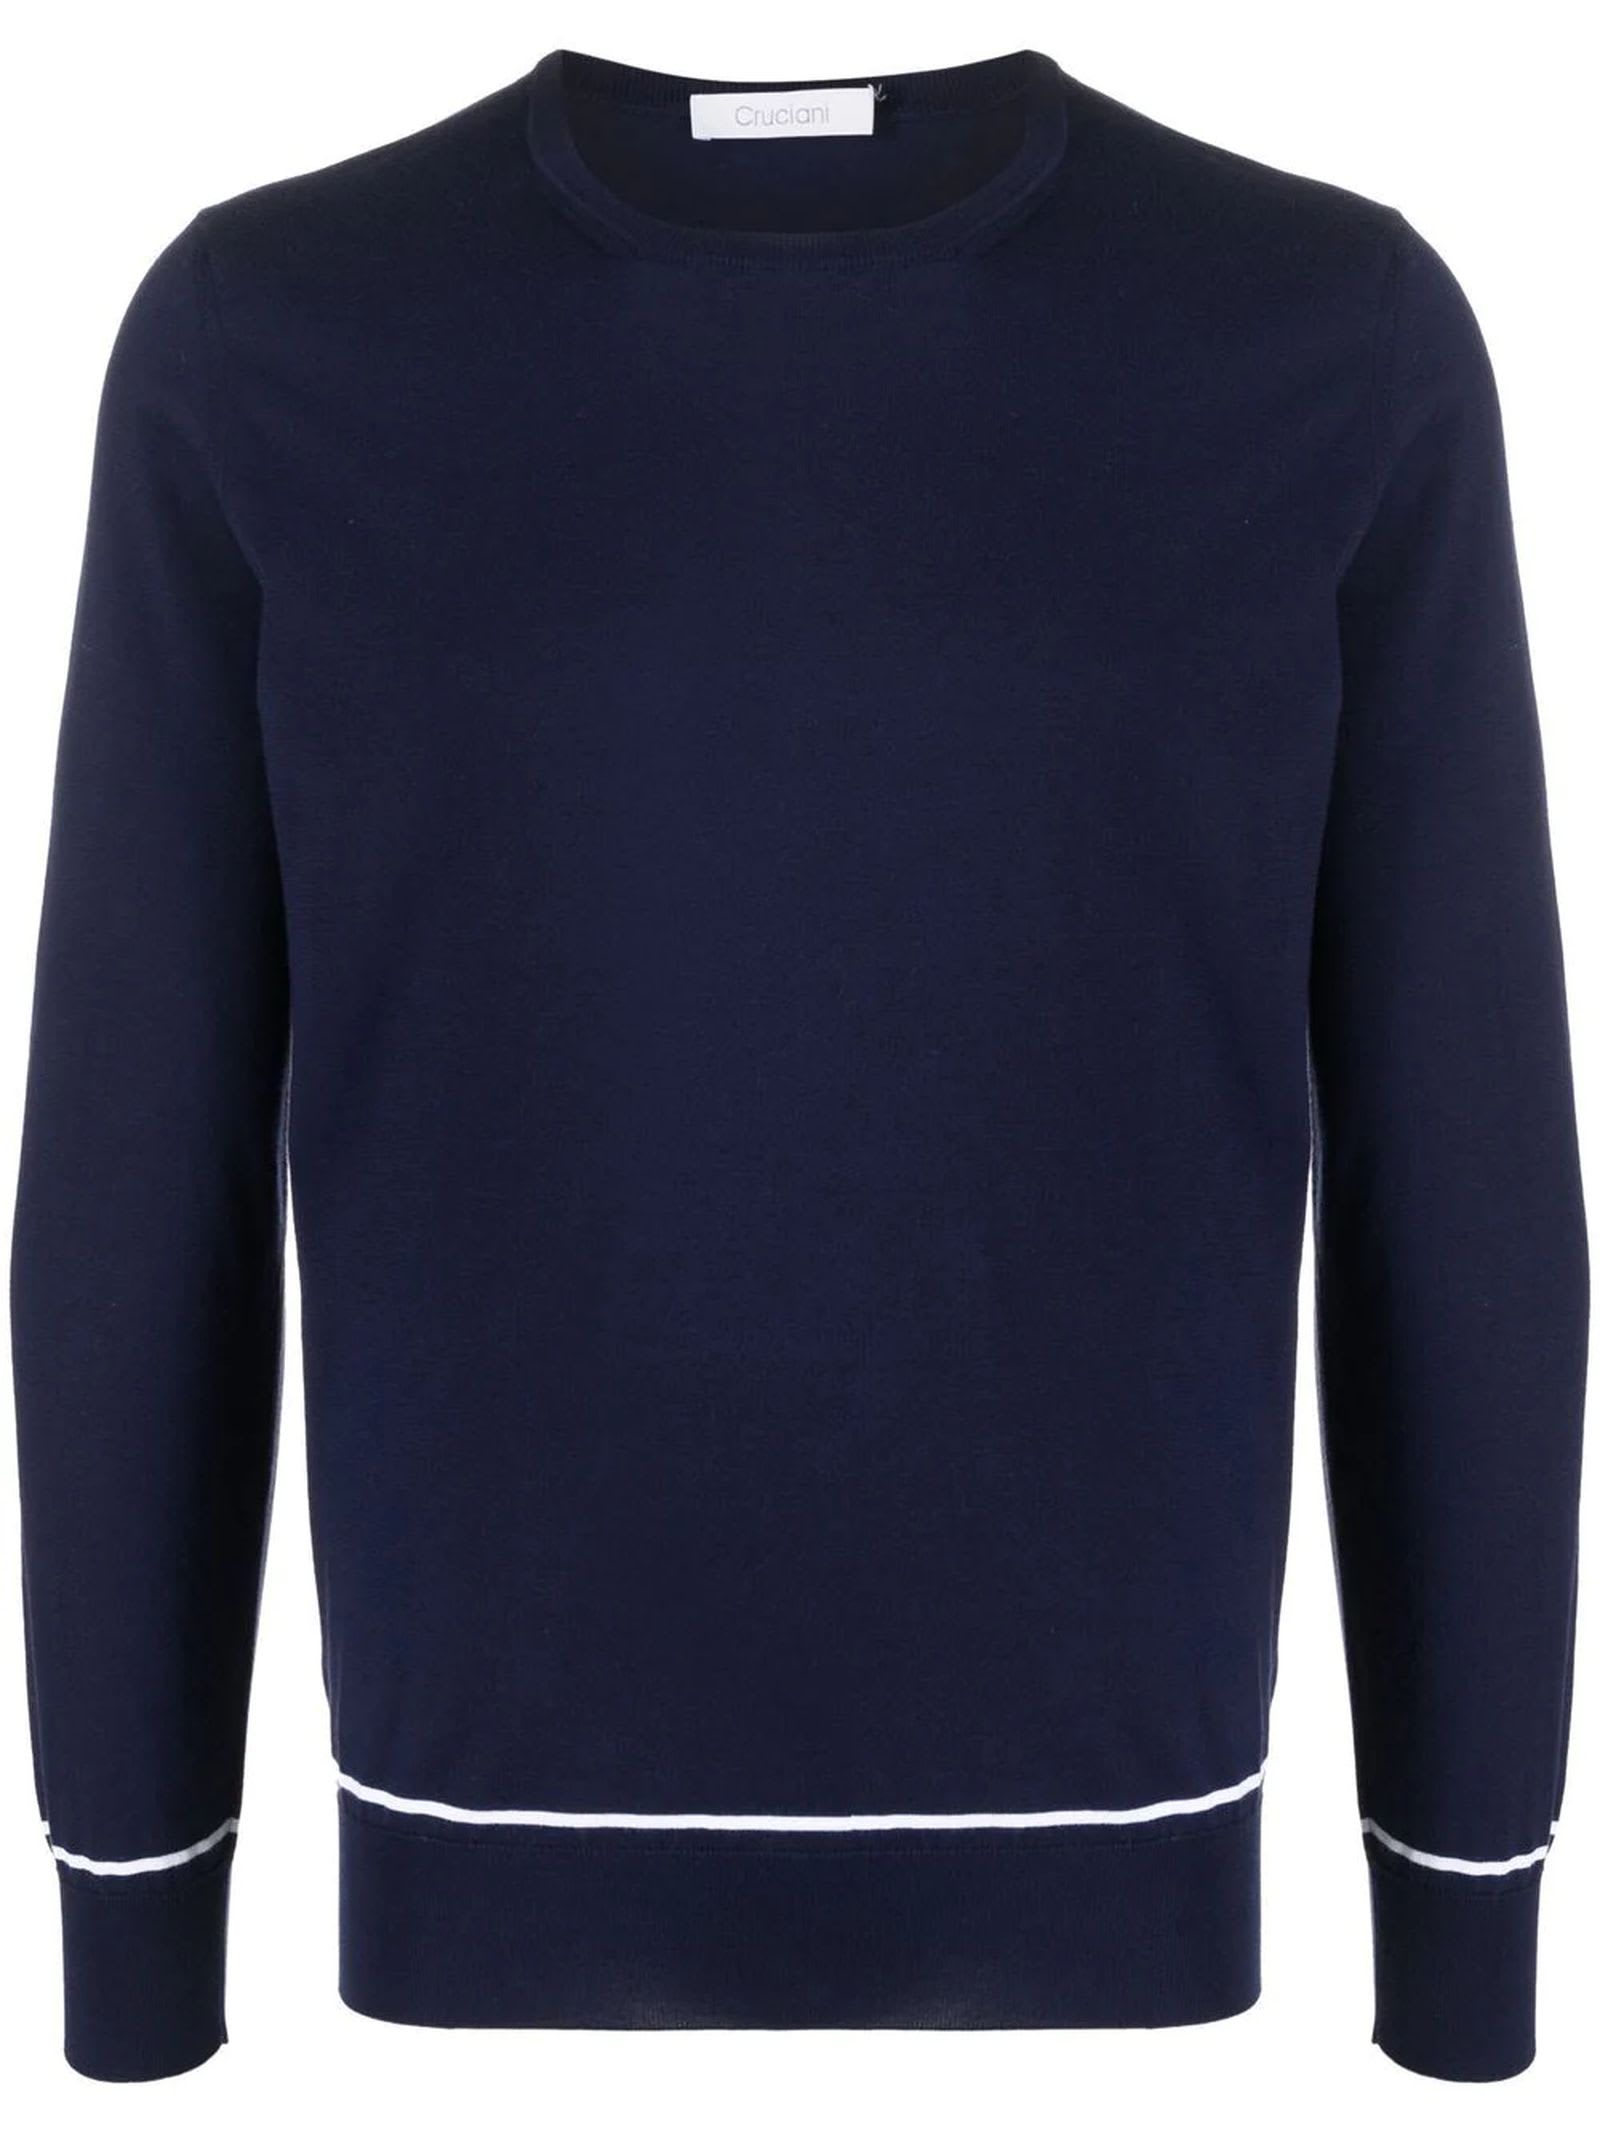 Cruciani Blue Cotton Crewneck Sweater